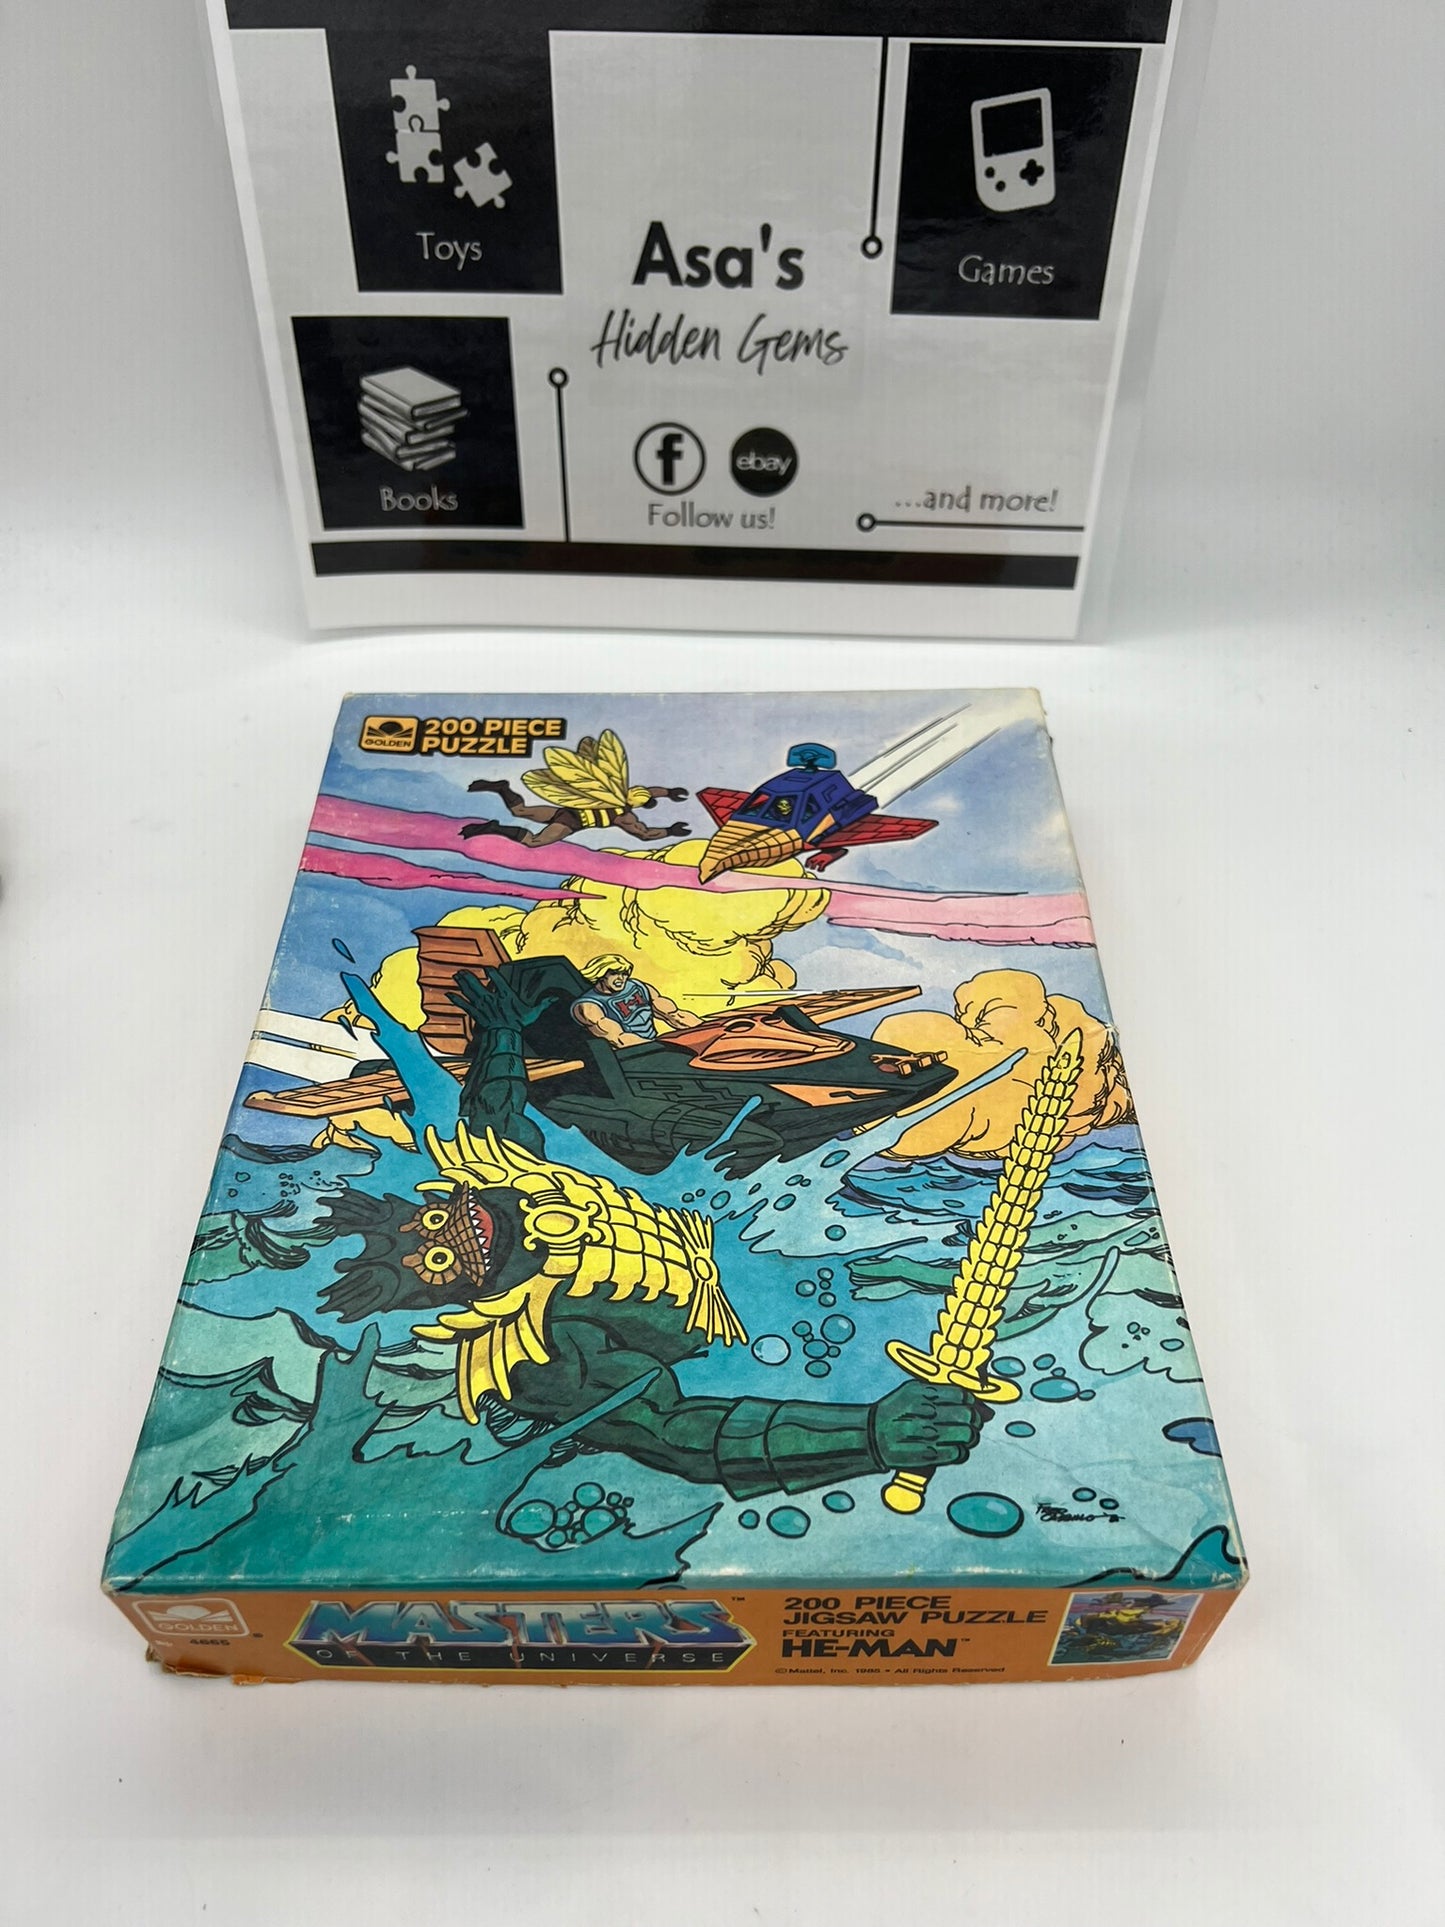 He-Man 200 Piece Jigsaw Puzzle Master of the Universe MOTU 1985 Mattel Golden